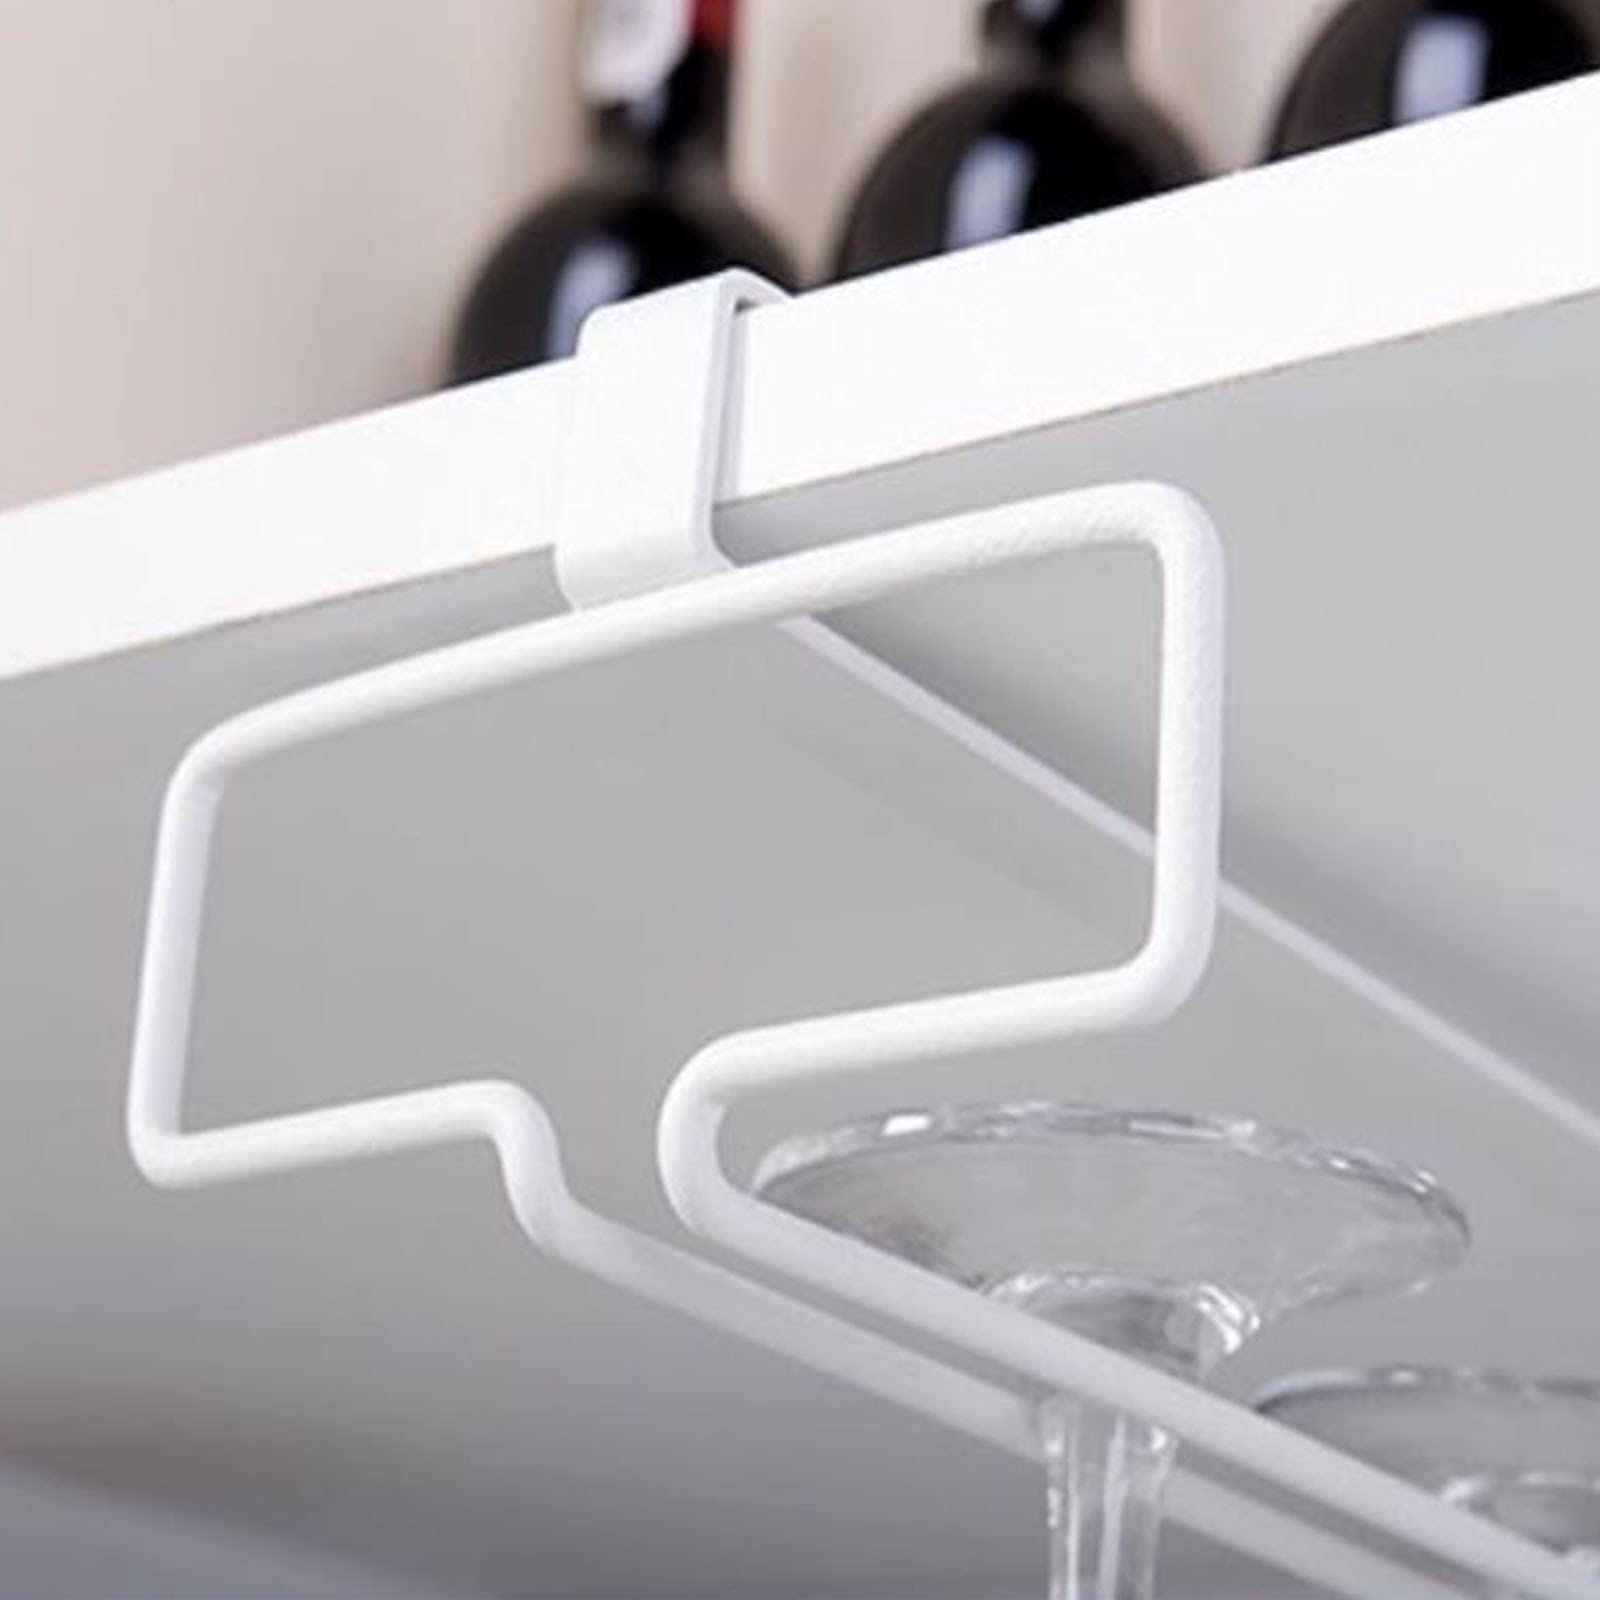 Wine Glass Rack, Under Cabinet Stemware Wine Glass Holder, Metal Hanging Glasses Hanger Organizer for Bar Kitchen (White)